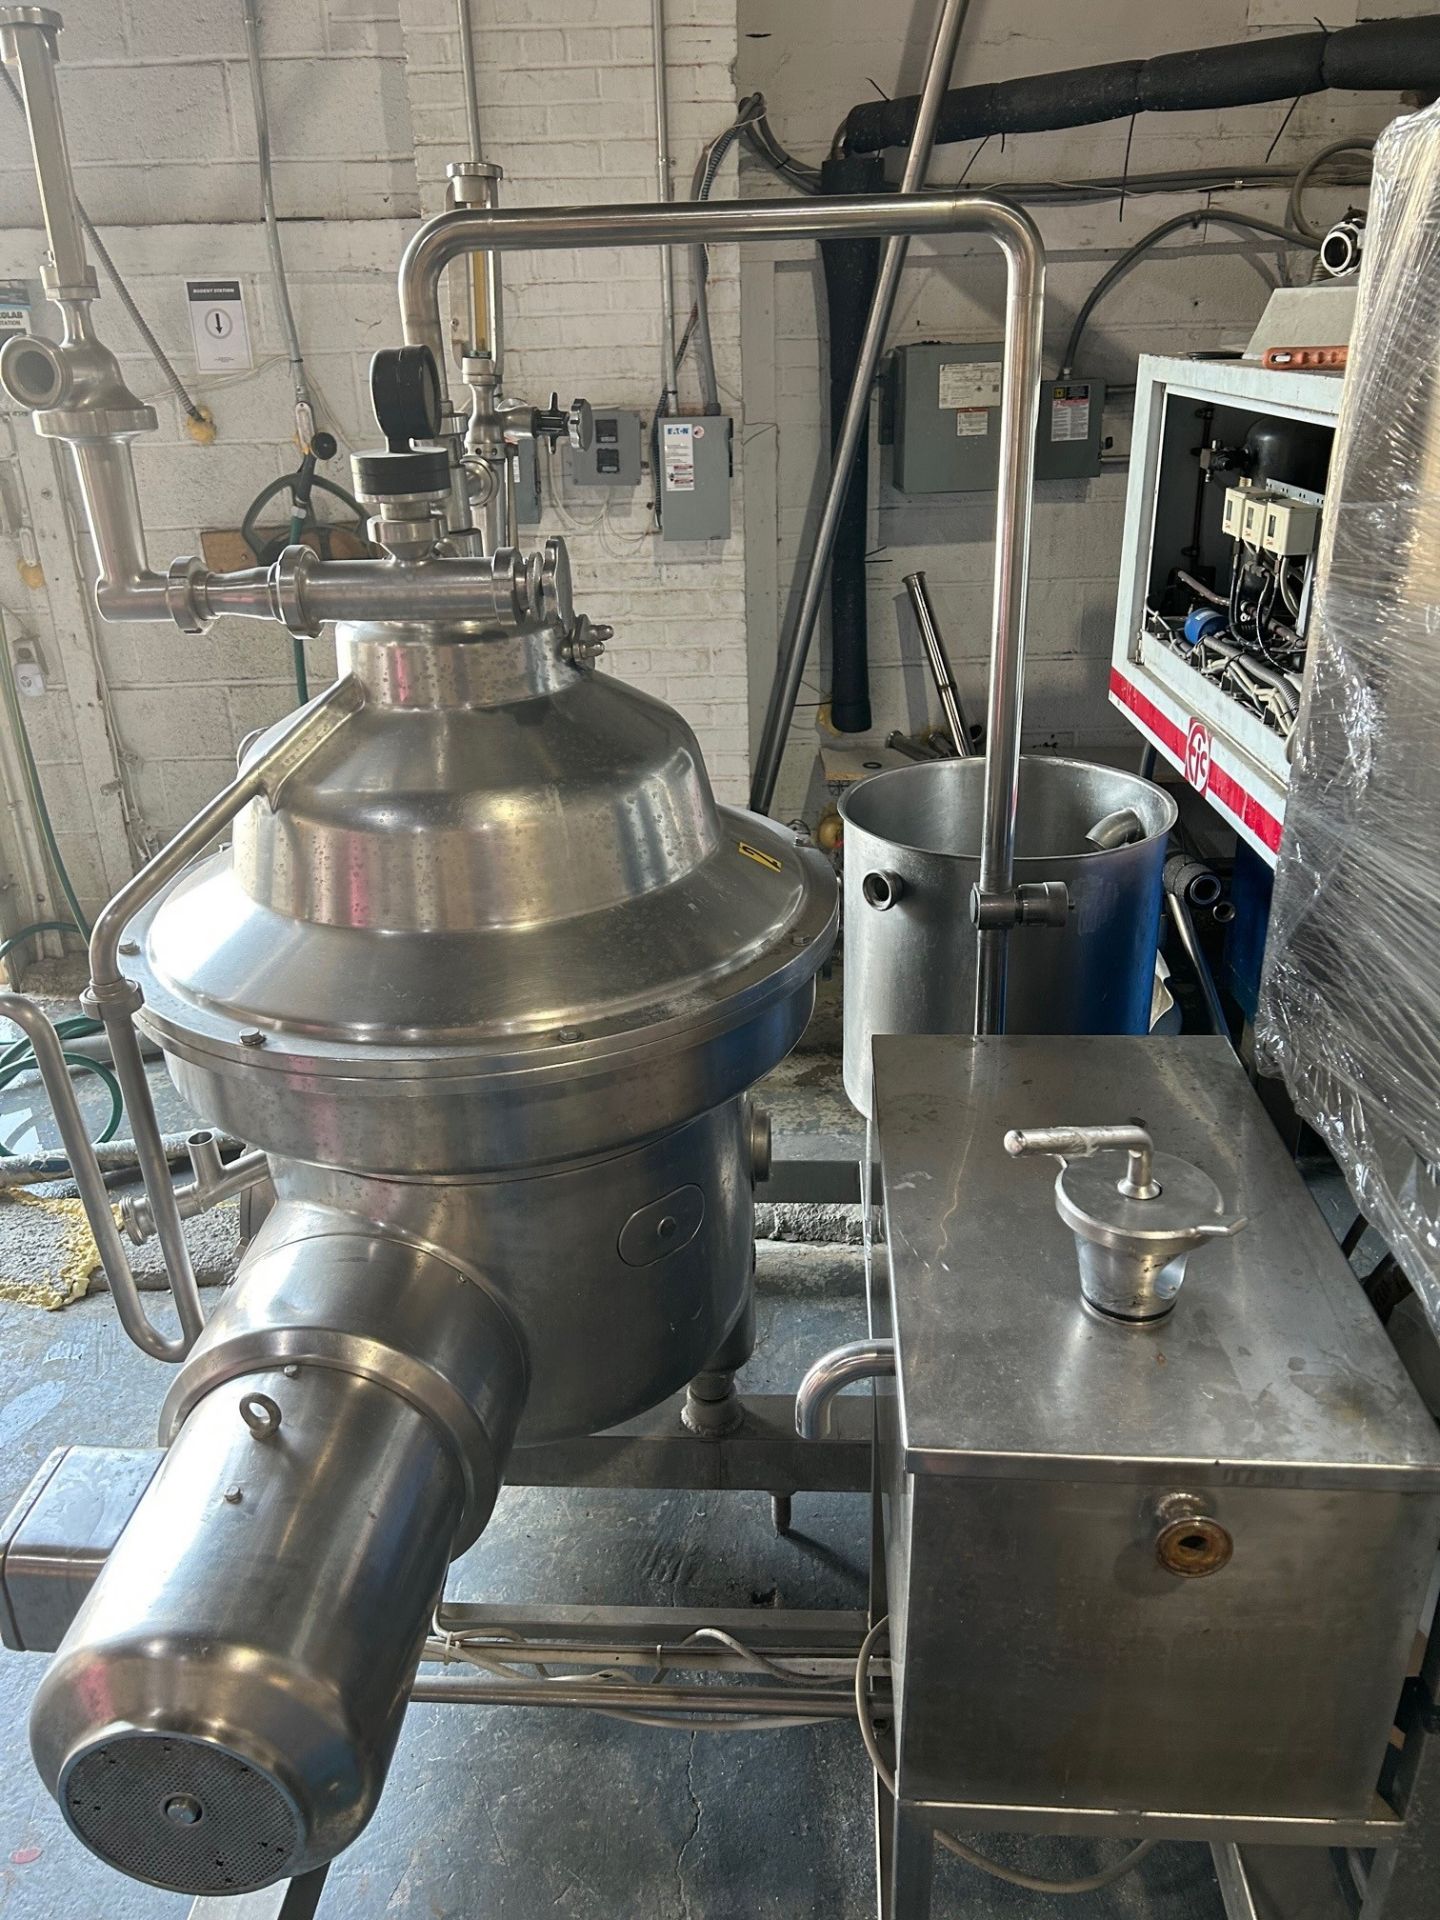 Westfalia SAMM 7006 CIP Milk Separator, 316SS, S/N 1650 946 (Located Linden, New Jersey) - Image 3 of 4